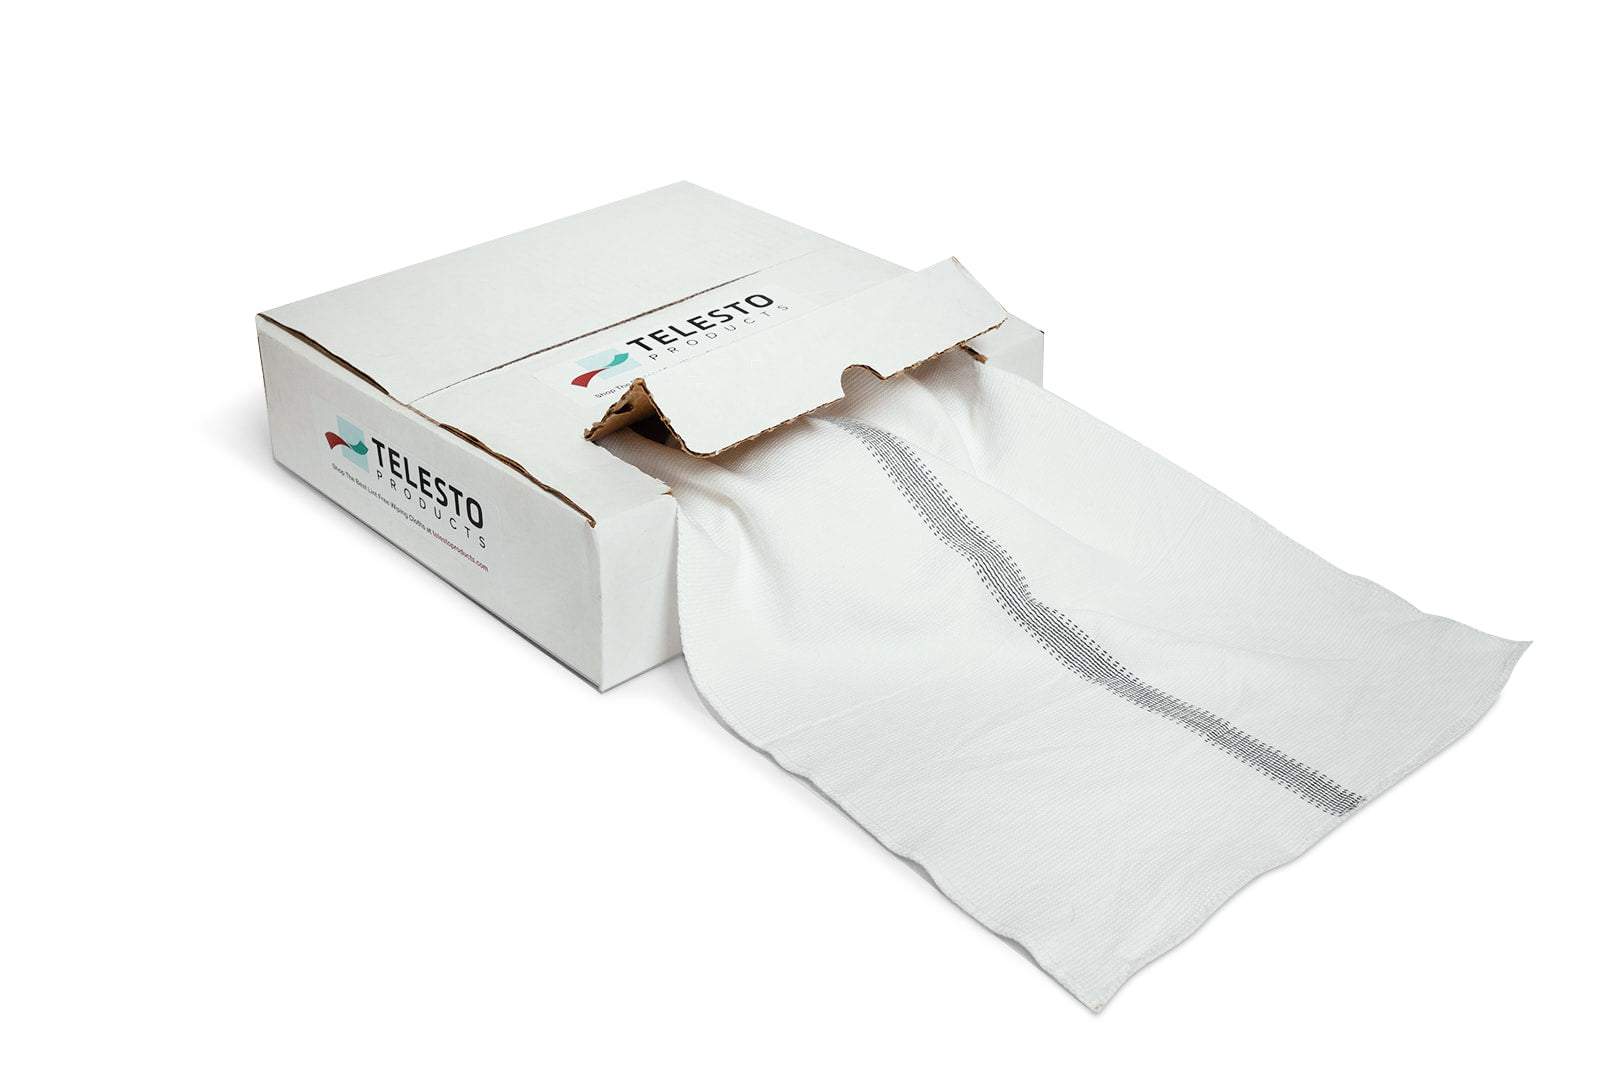 Linteum Super Bar Mop Towels White w/Triple Stripe design 16x19